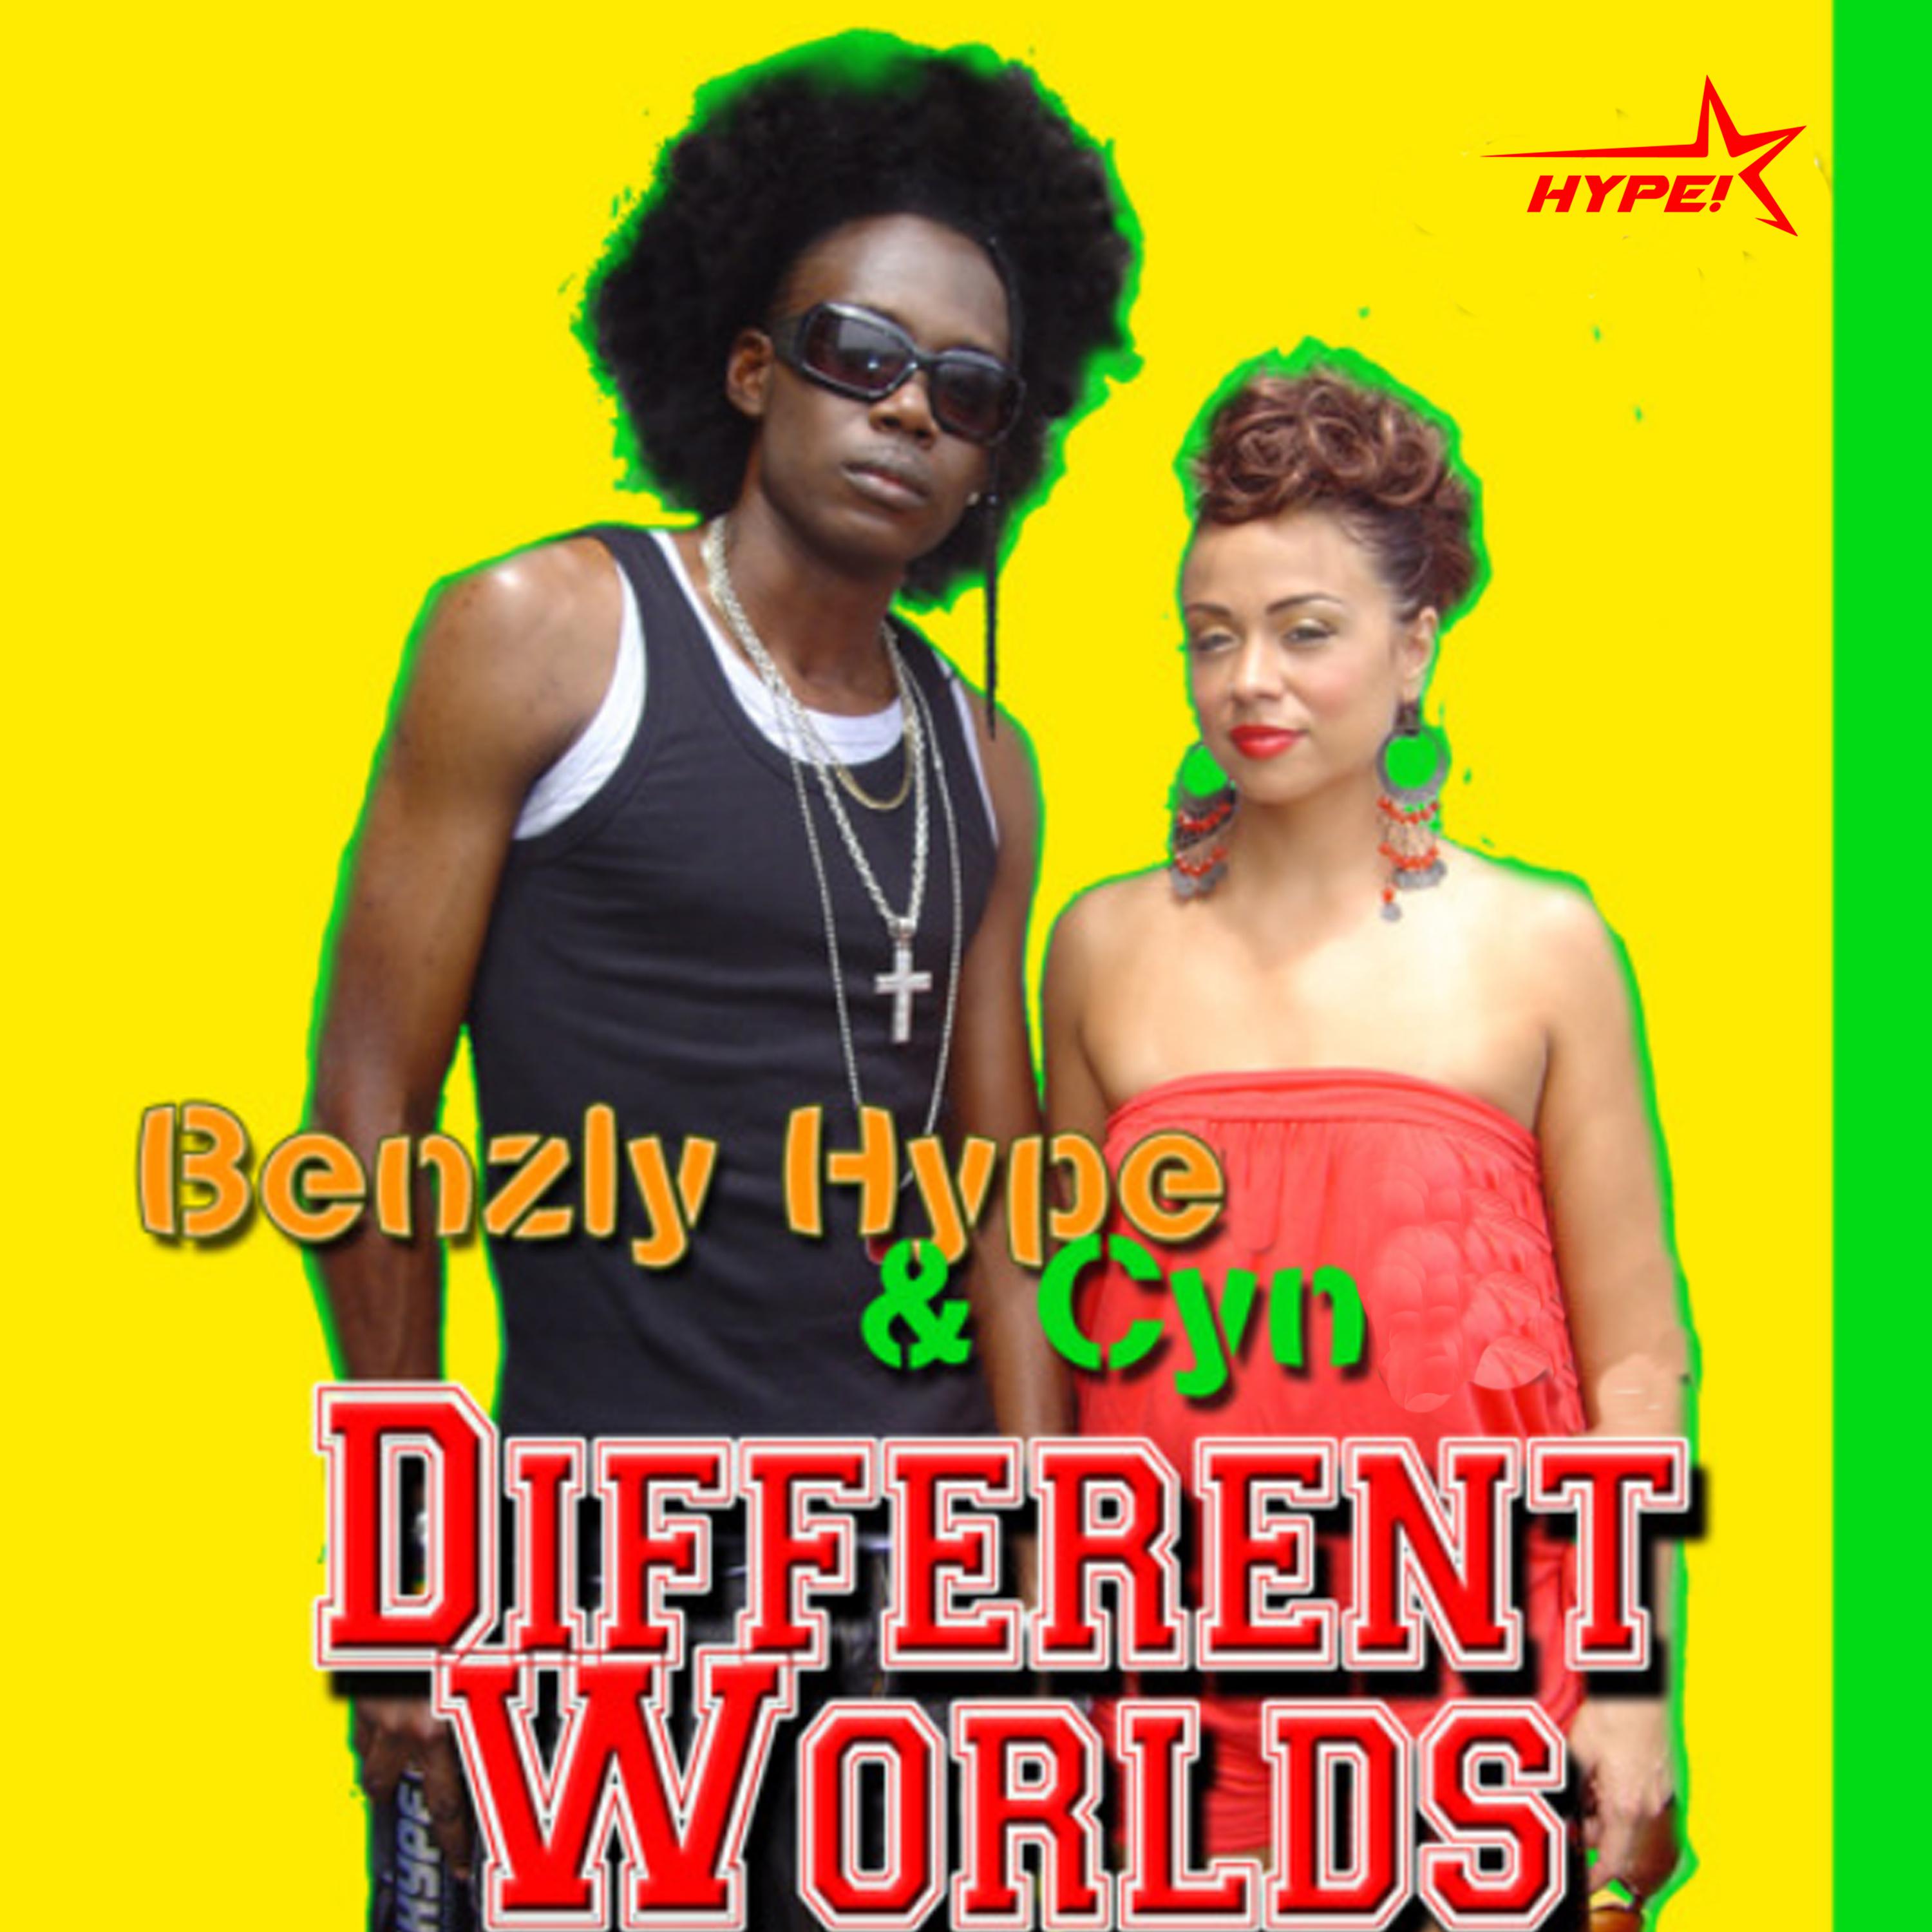 Benzly Hype - Different Worlds (Garage Remix)